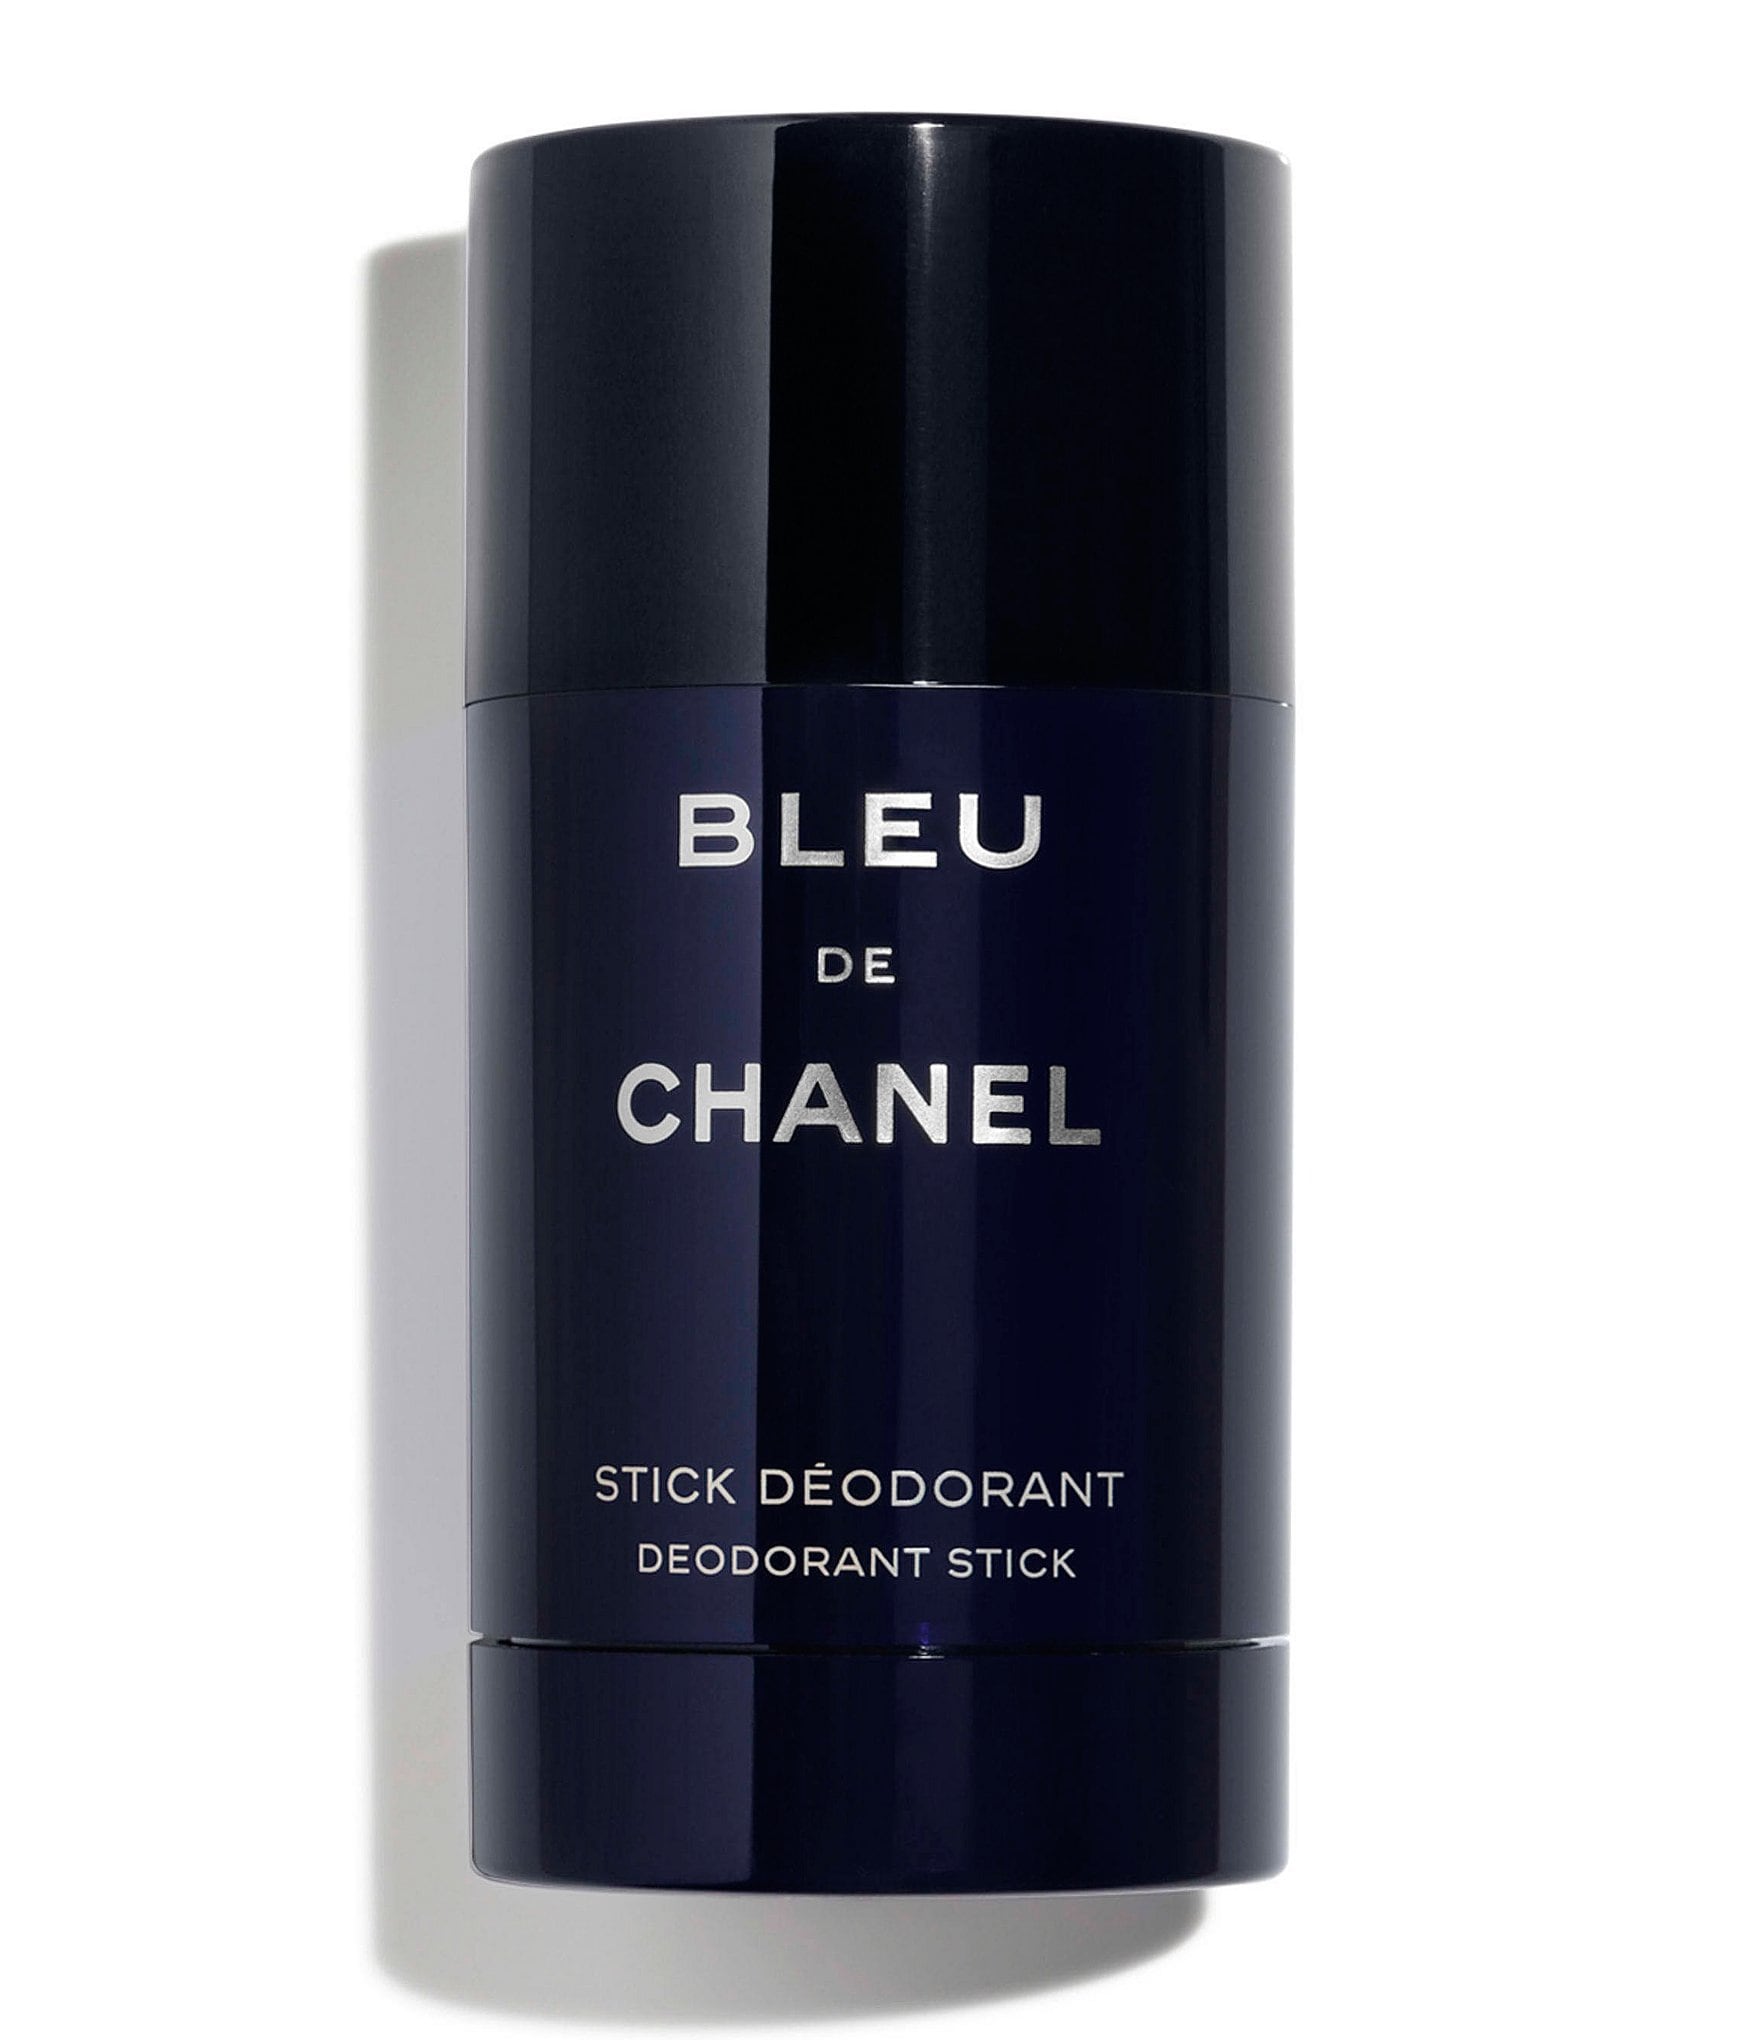 Stick Deodorant Chanel Égoïste Platinum (75 ml) – Bricini Cosmetics